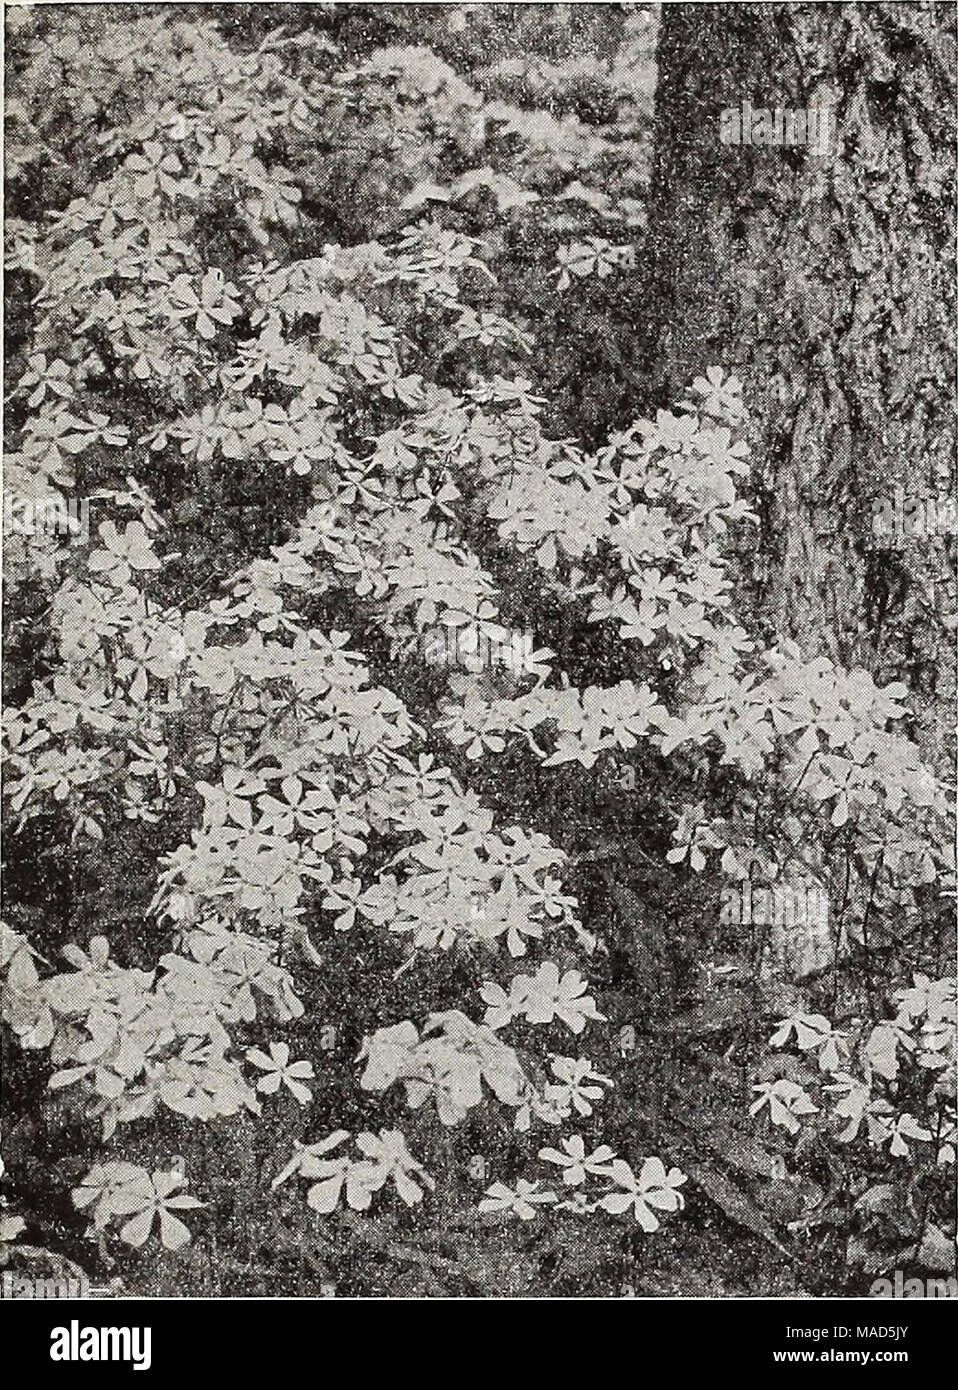 . Dreer's wholesale catalog for florists : autumn 1938 edition . Phlox dlvarlcata canadensis Phlox divarlcata Per doz. Per 100 Canadensis $1 50 $10 00 Stock Photo